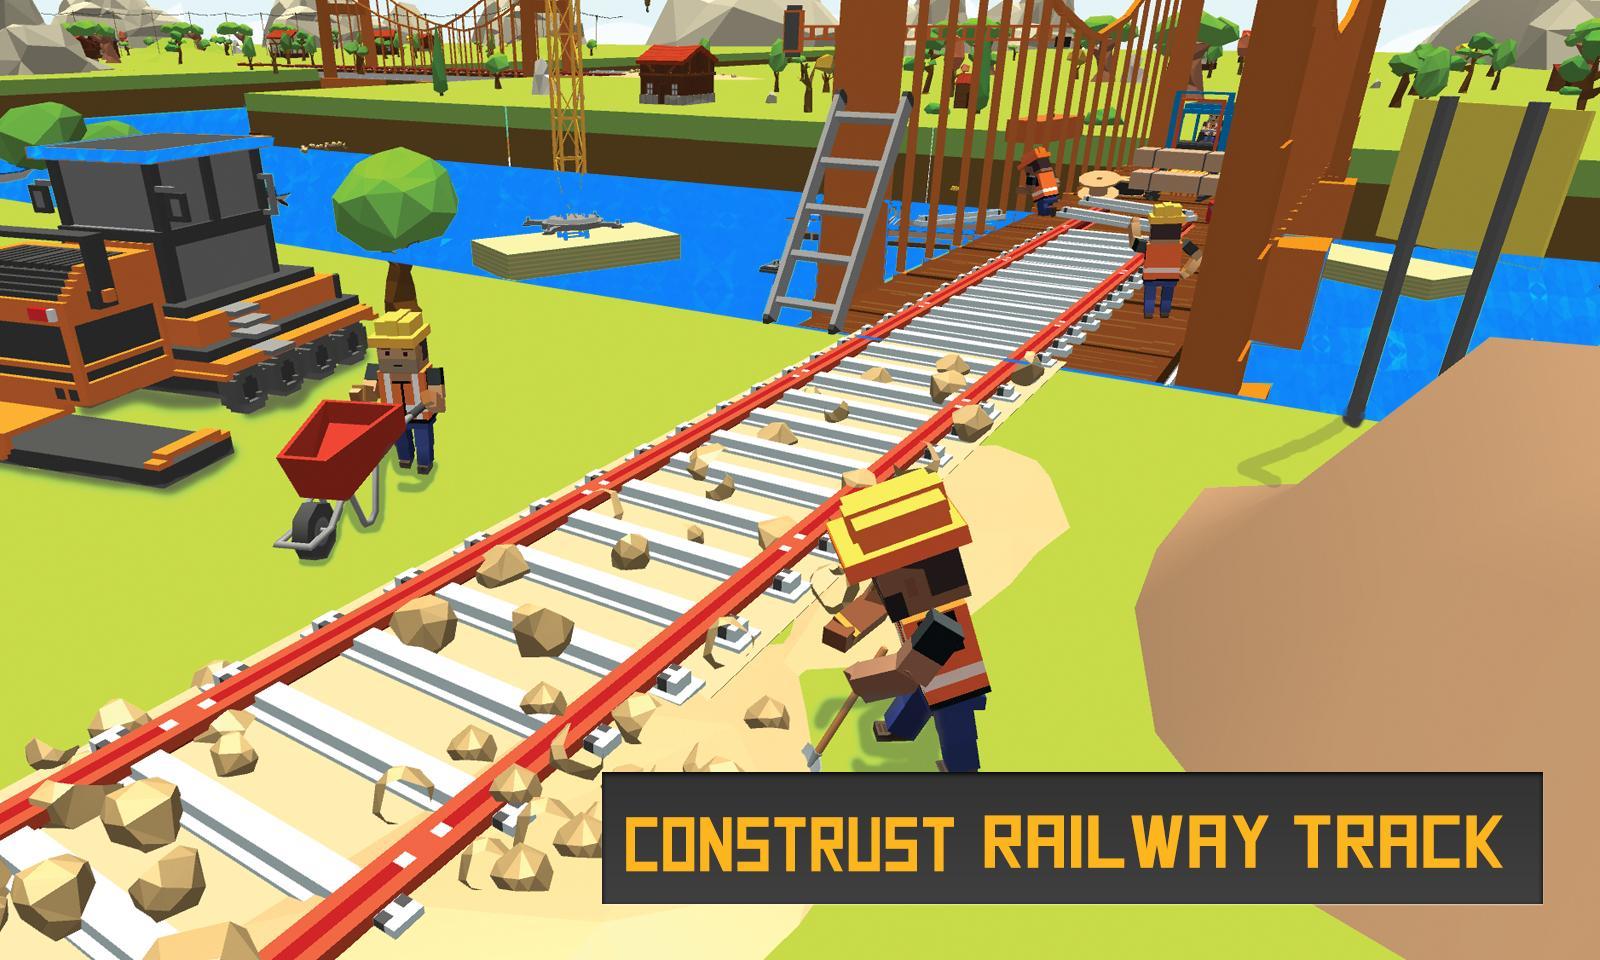 Screenshot 1 of River Railway Bridge Construction Train Games 2017 1.1